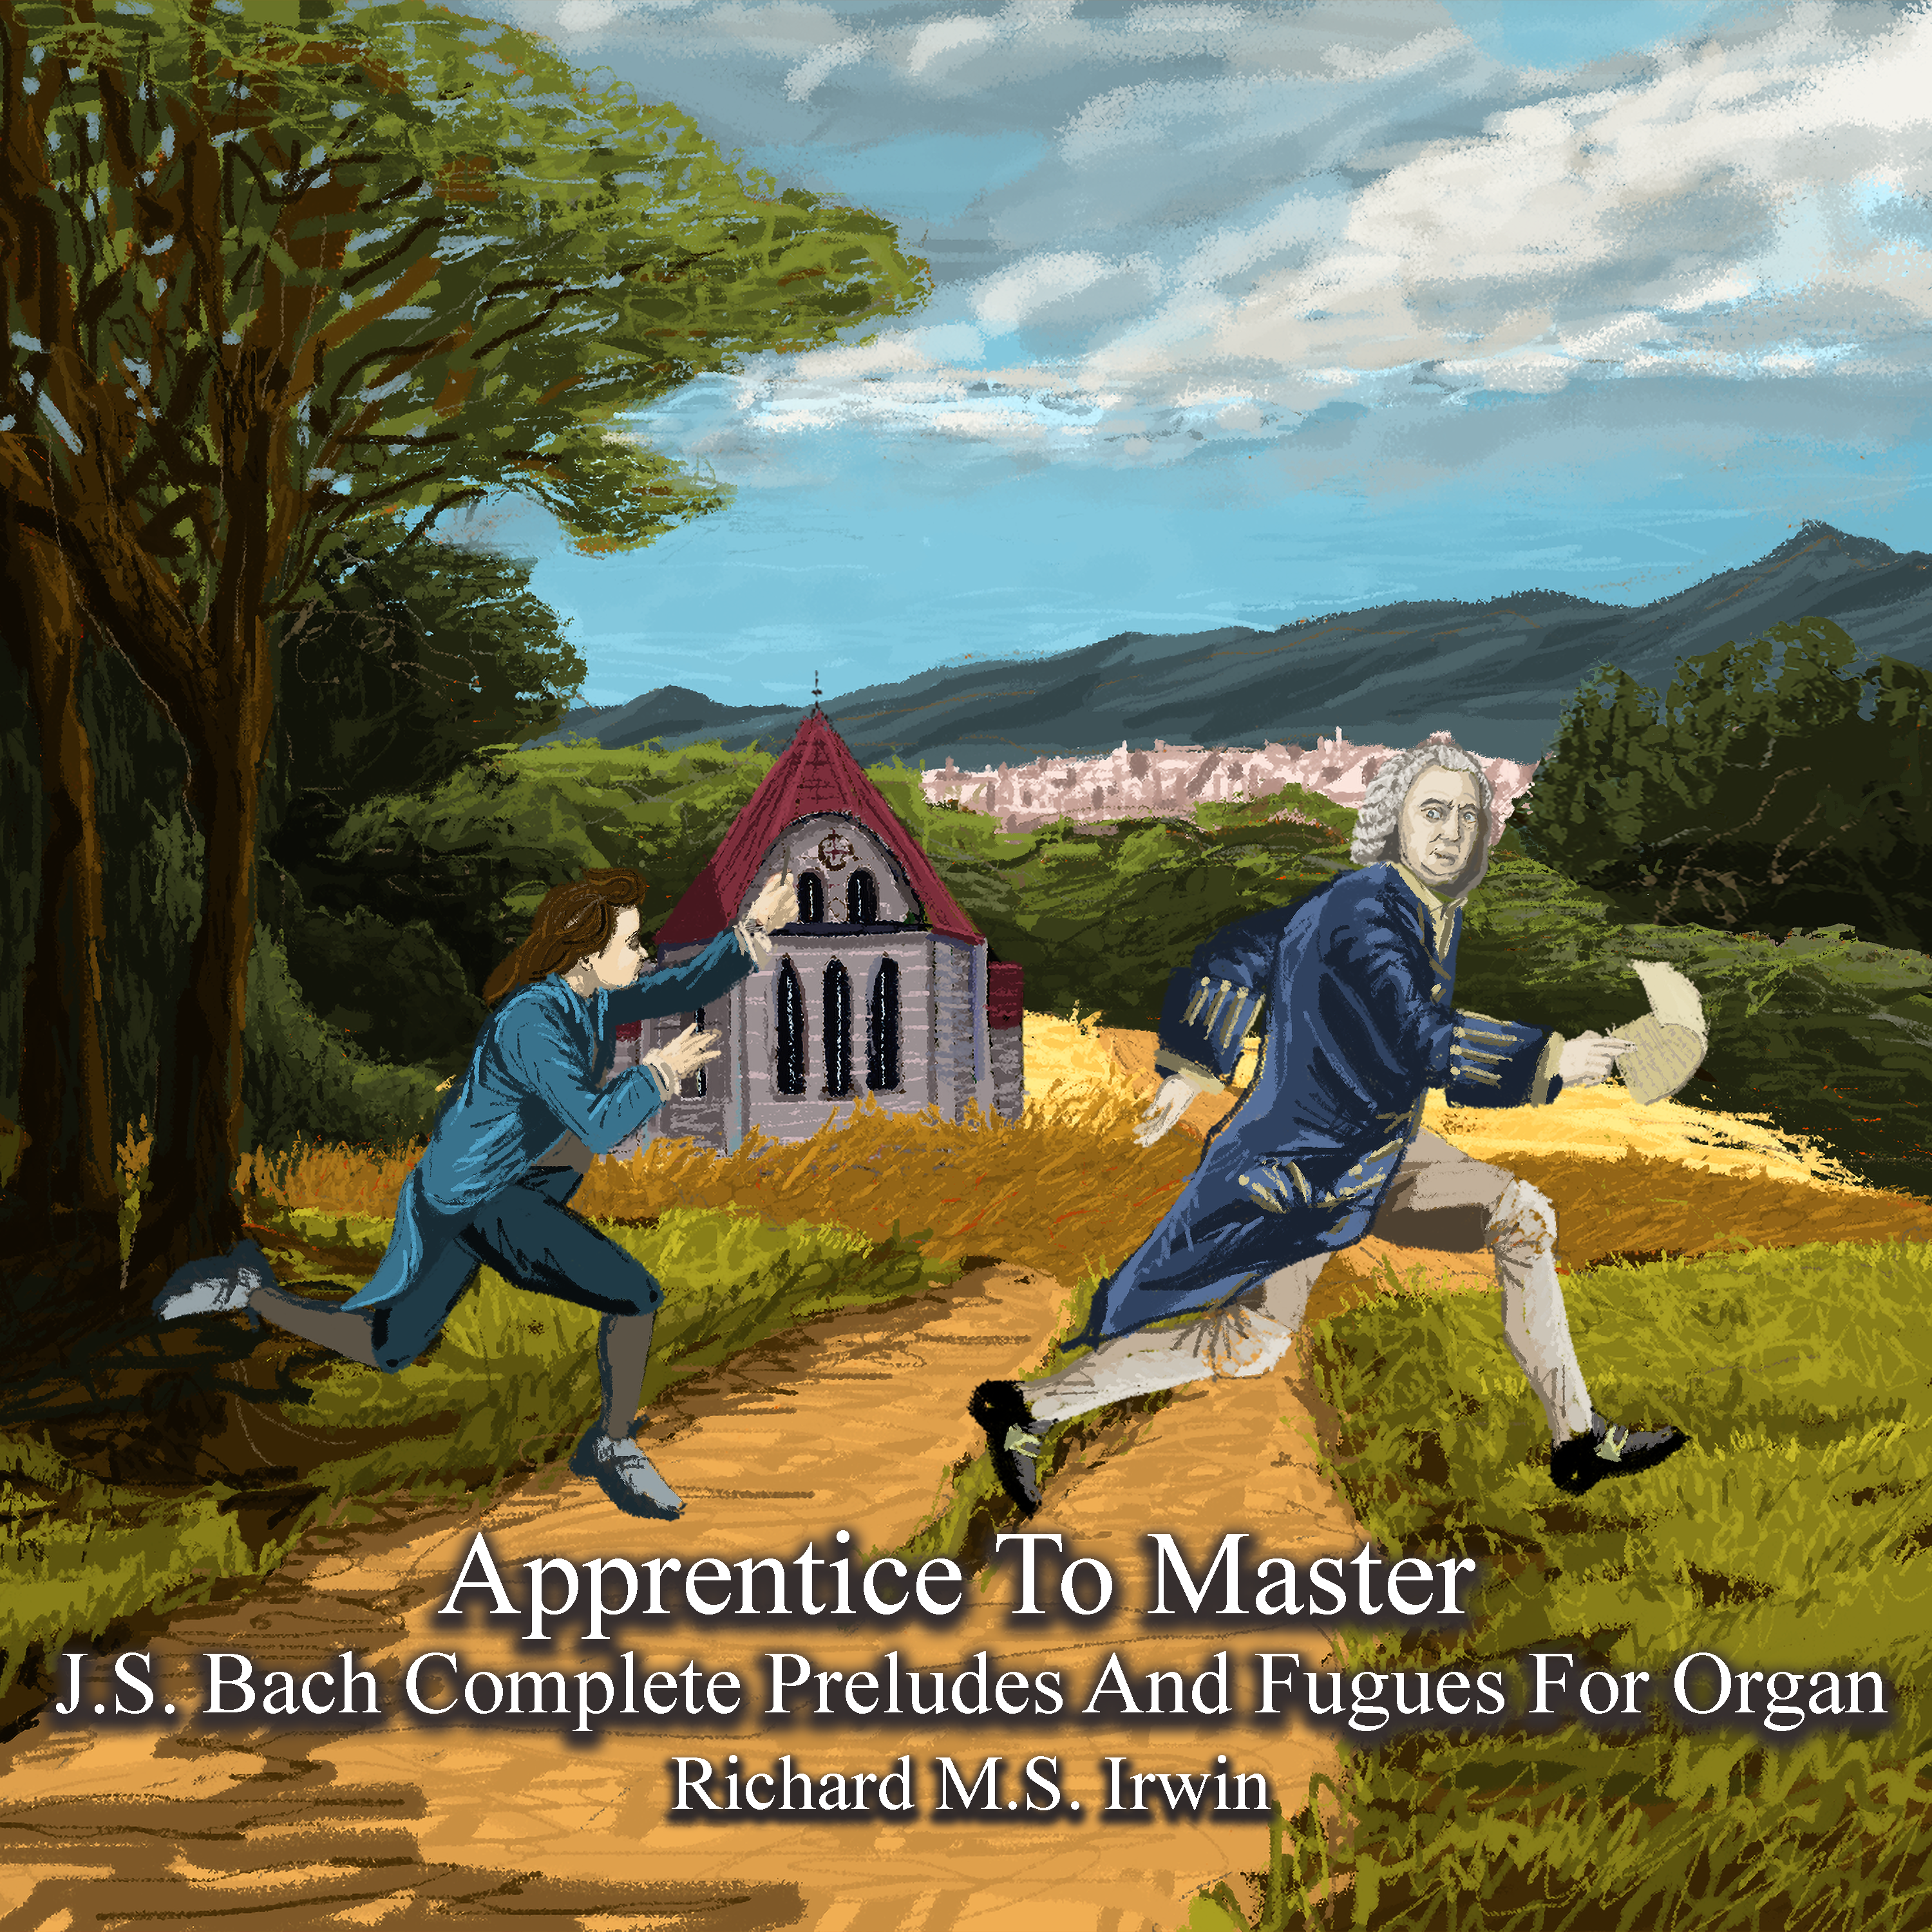 Albums - Apprentice To Master